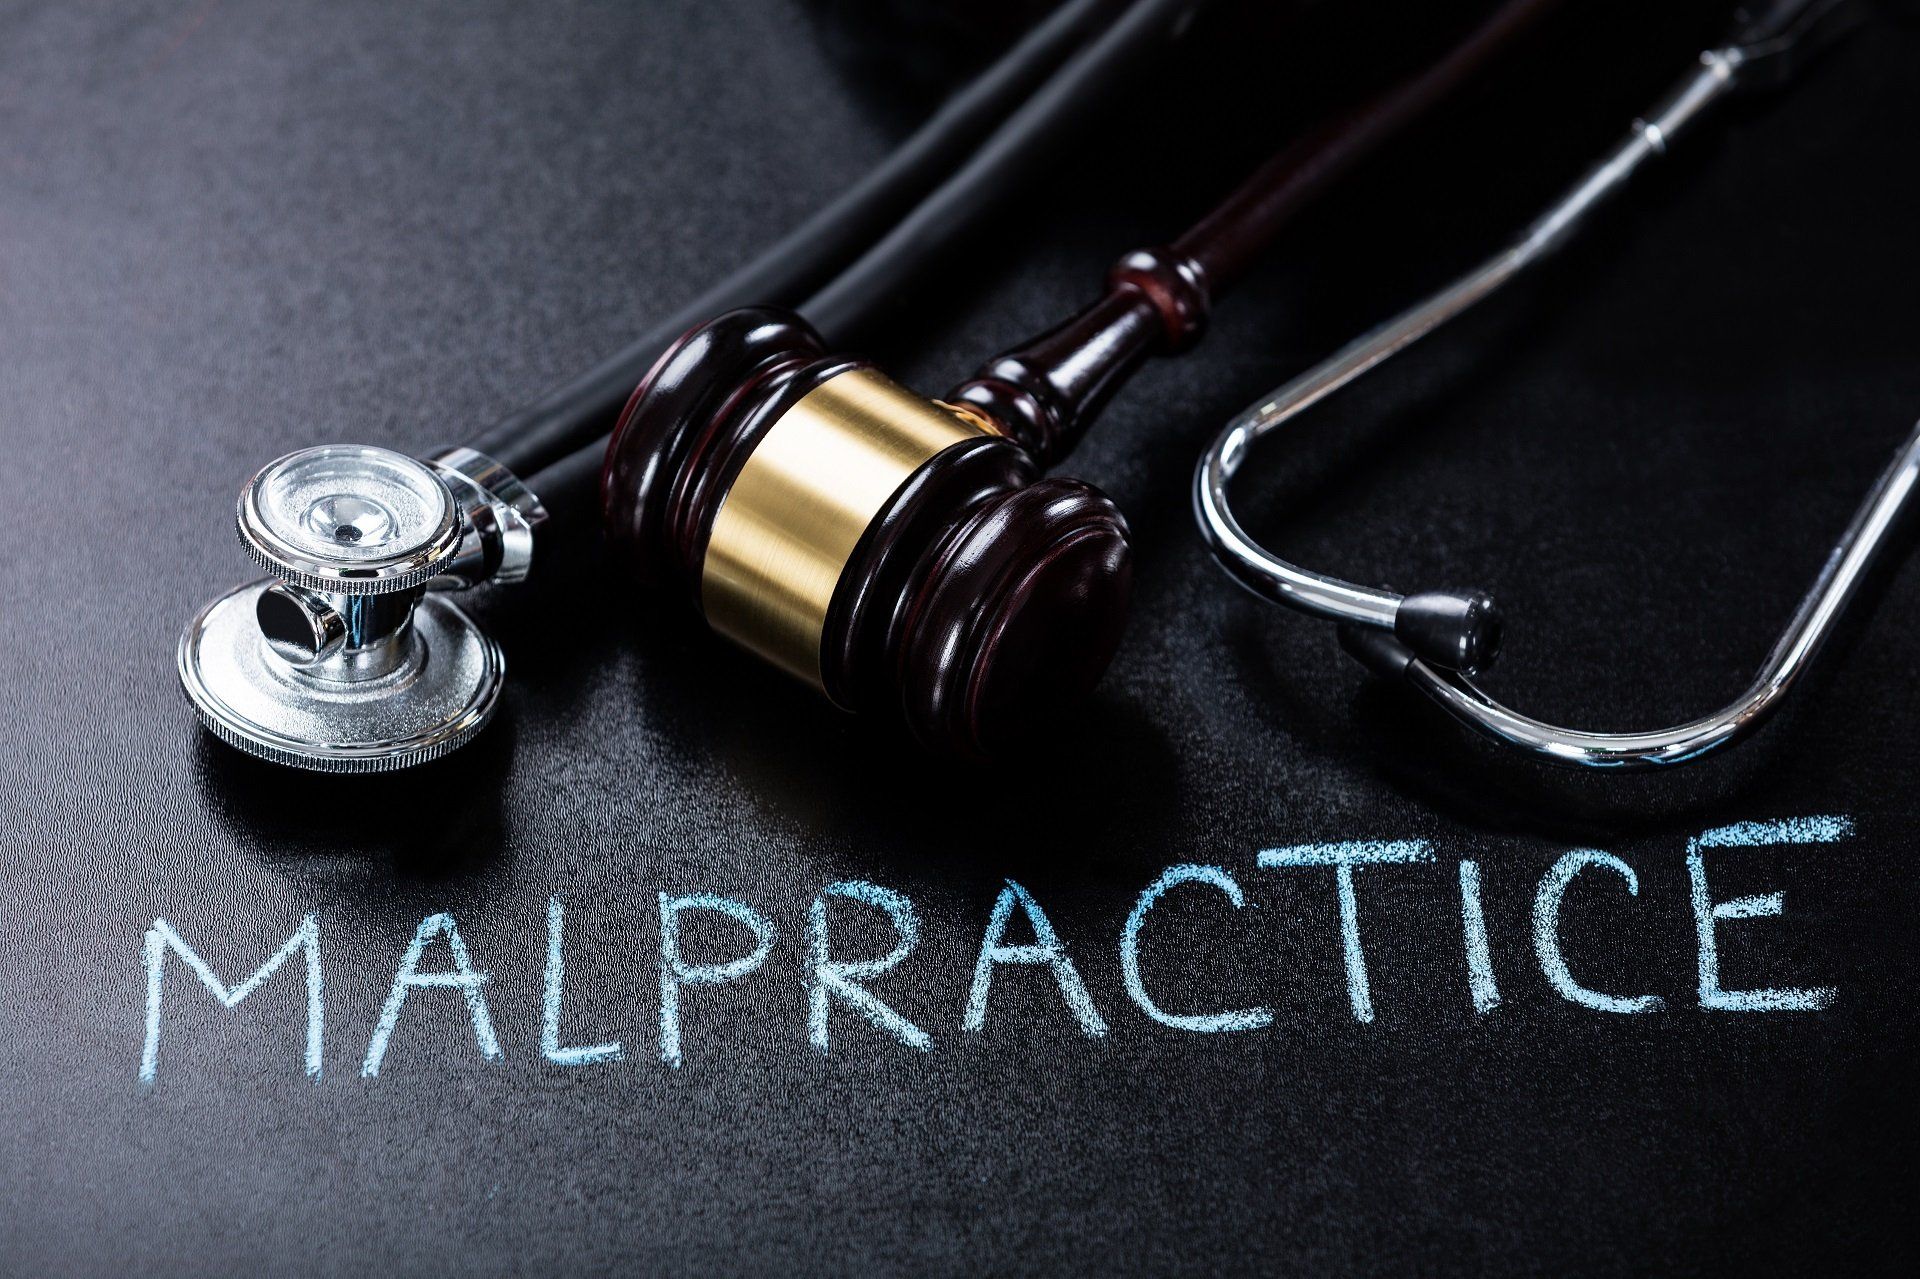 constitutes medical malpractice